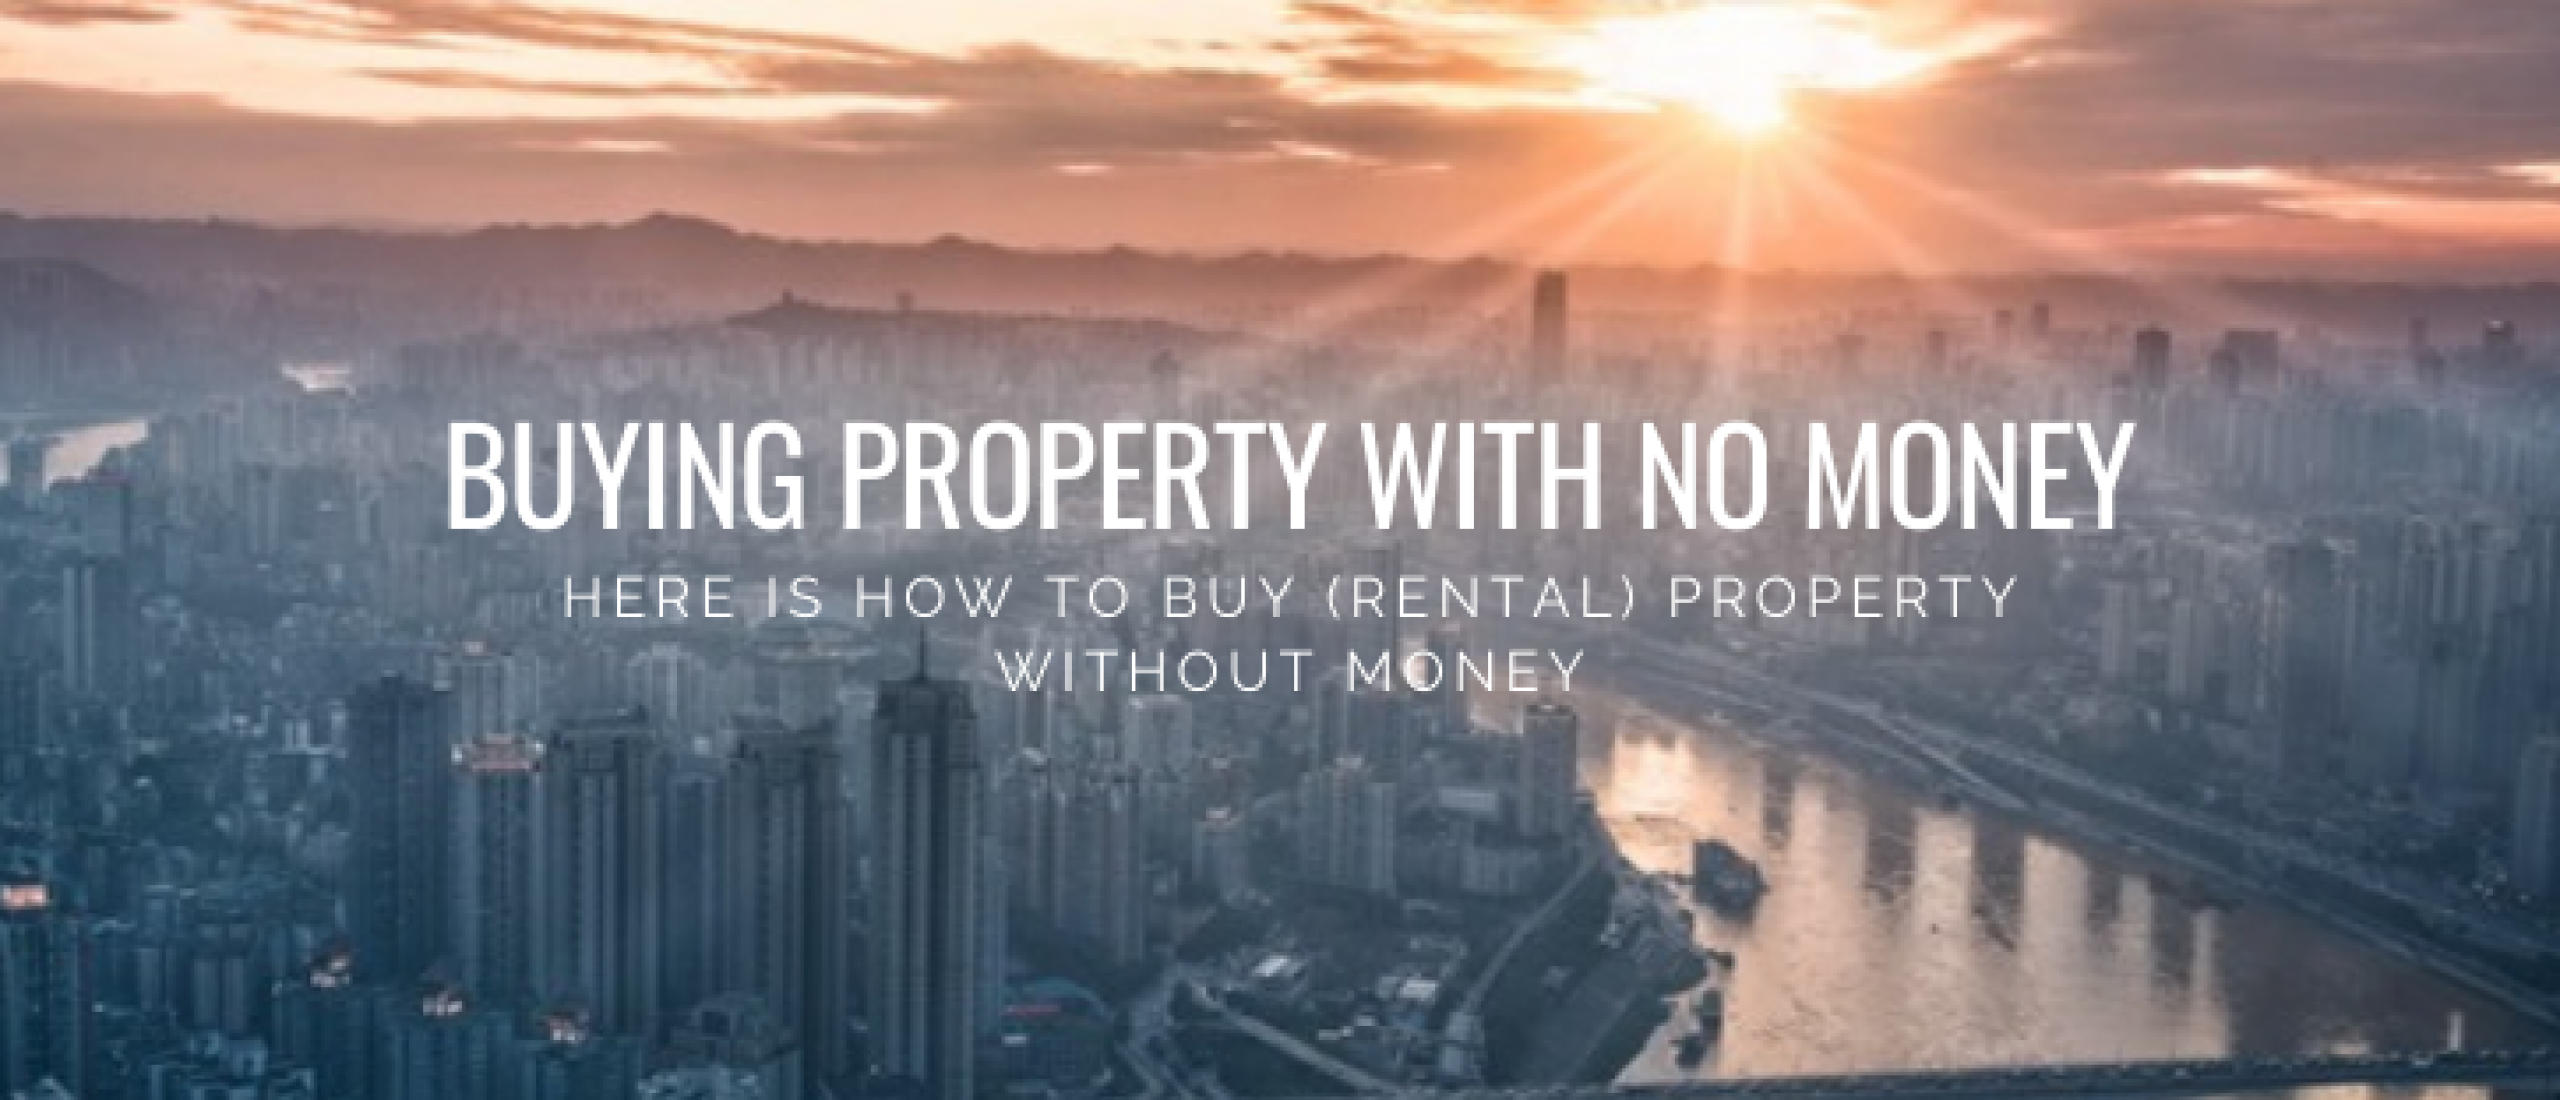 Buying (Rental) Property Without Money: Explanation & Tips